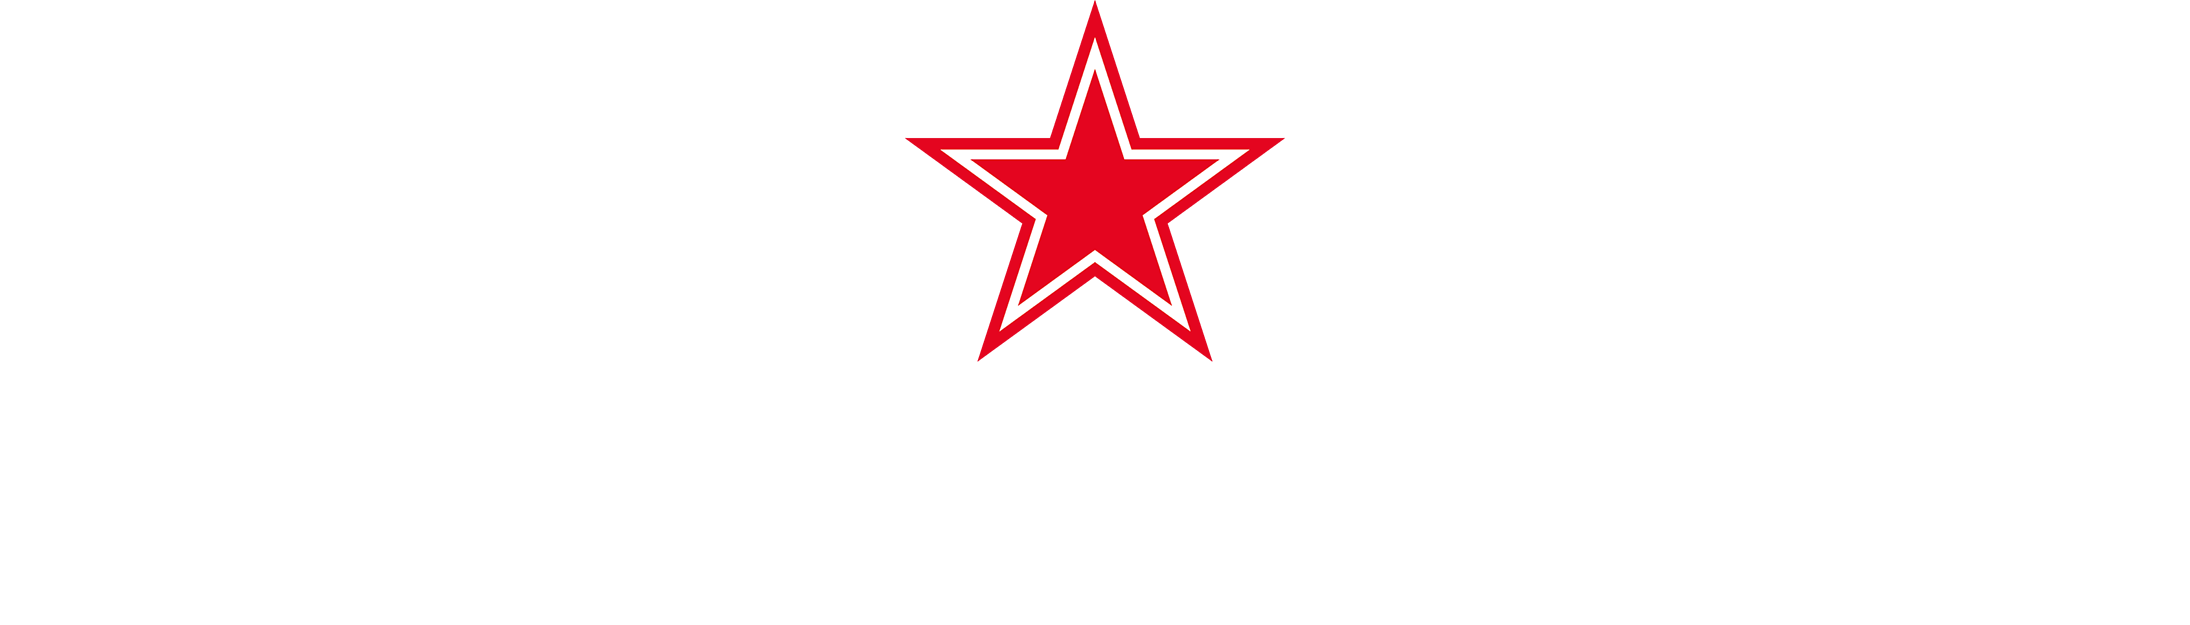 S.PELLEGRINO logo